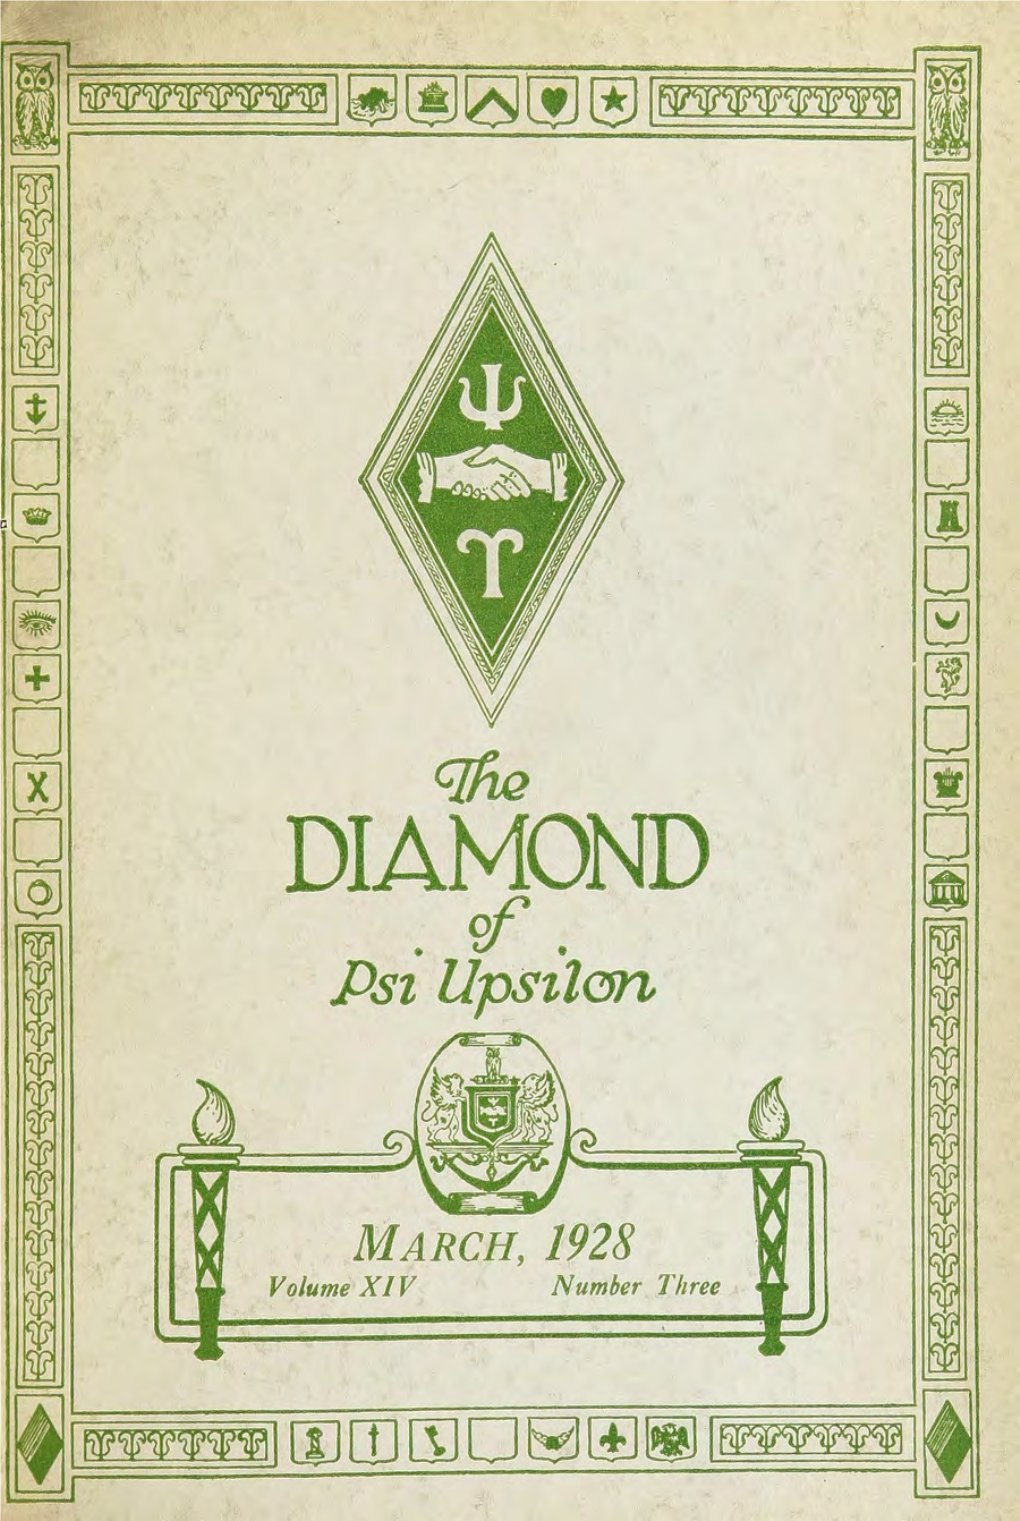 The Diamond of Psi Upsilon Mar 1928